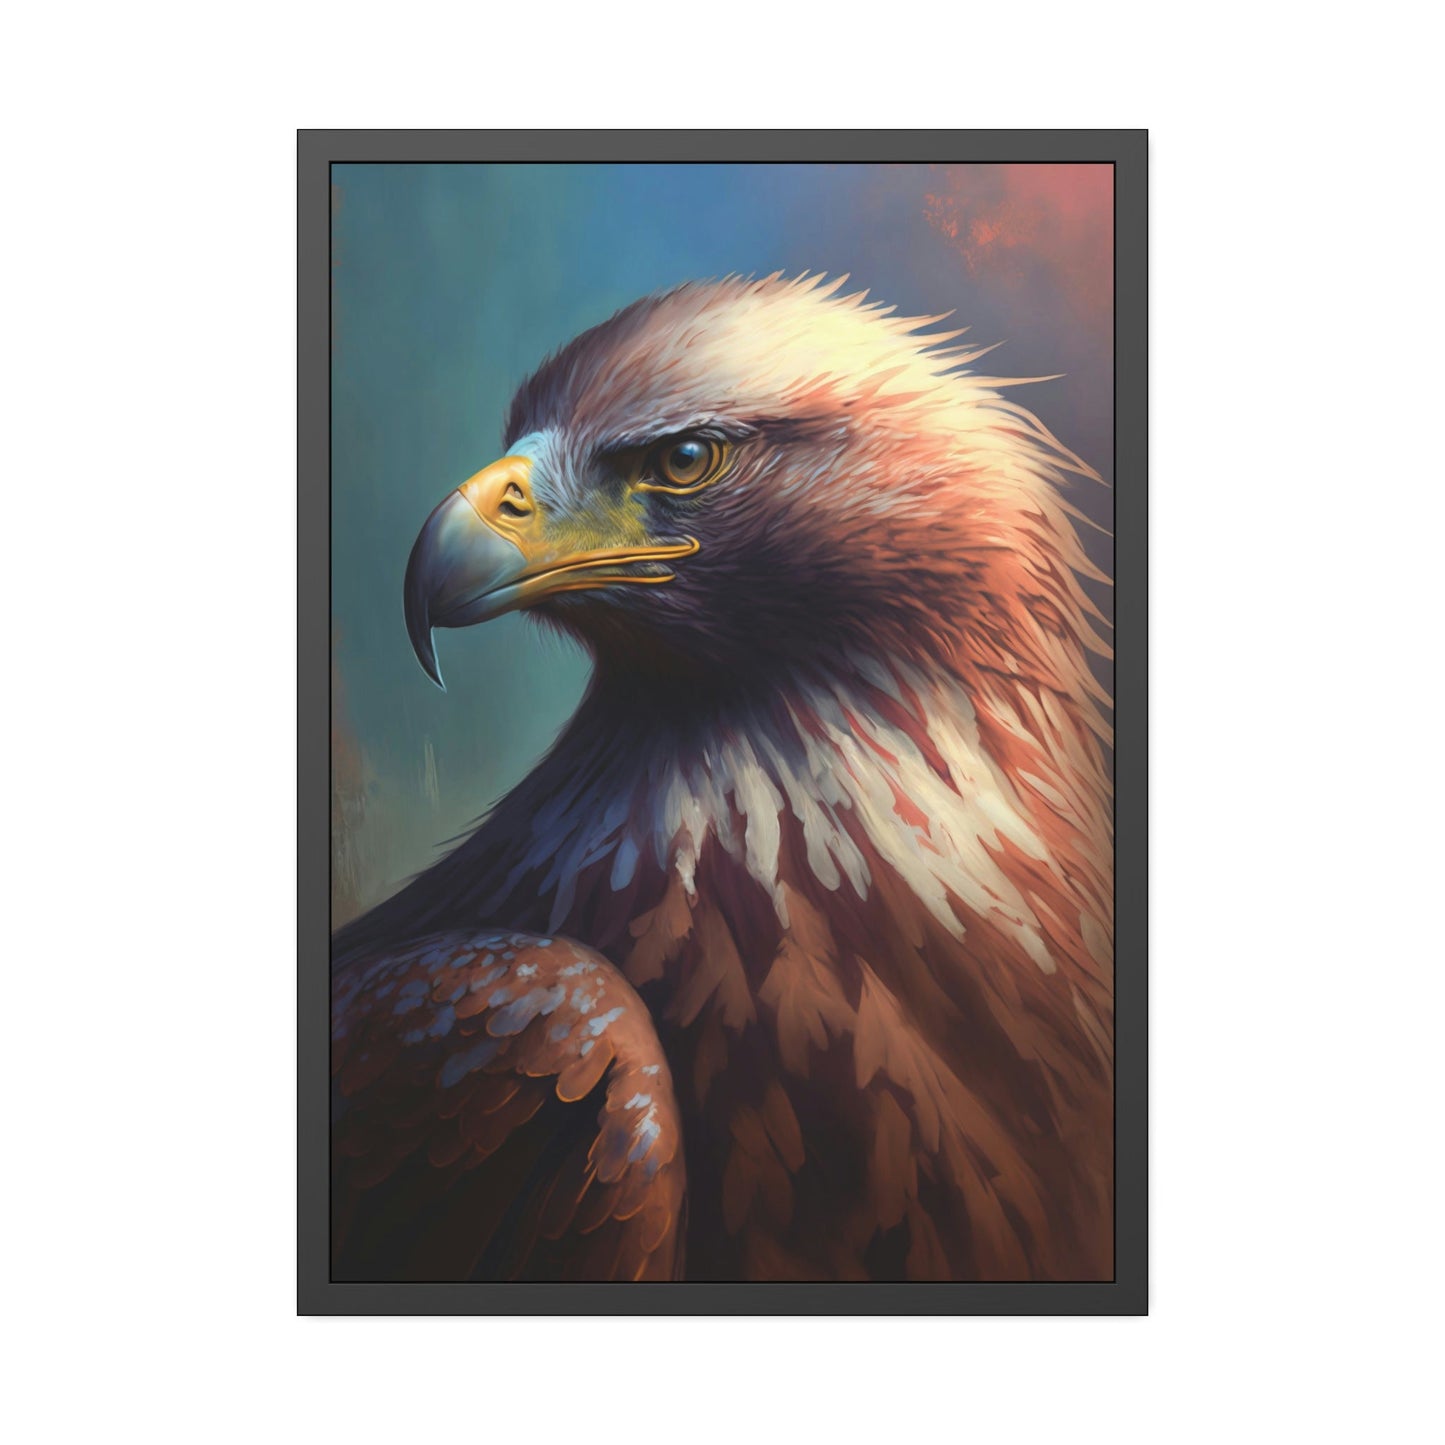 Soaring Solitude: Majestic Eagles Grace the Natural Canvas